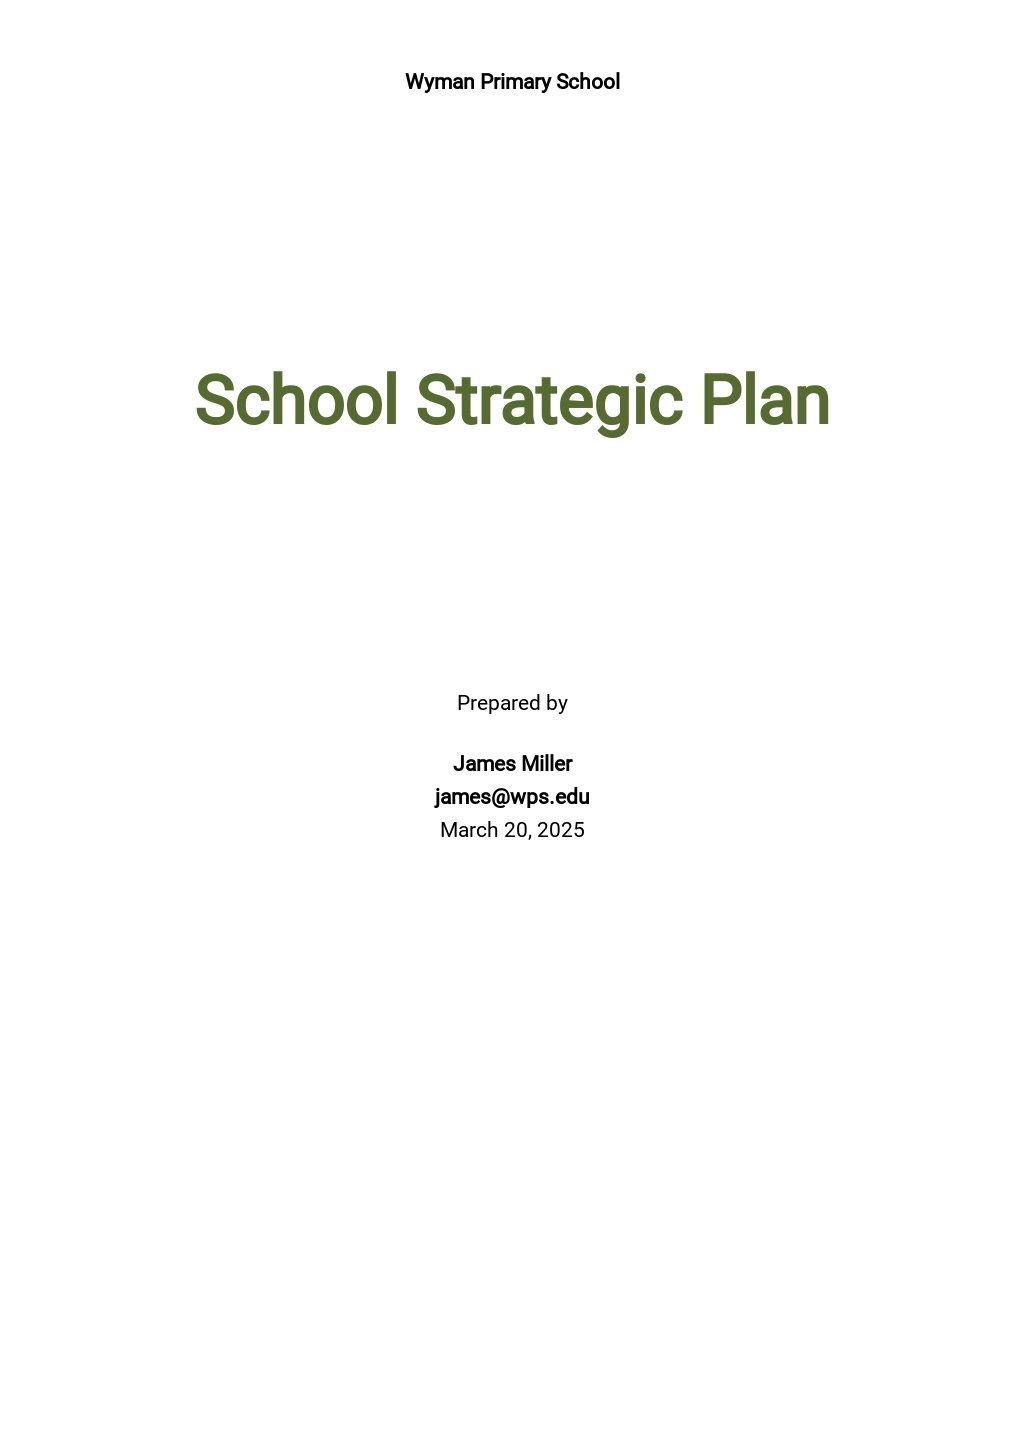 School Strategic Plan Template - Google Docs, Word, Apple Pages, PDF